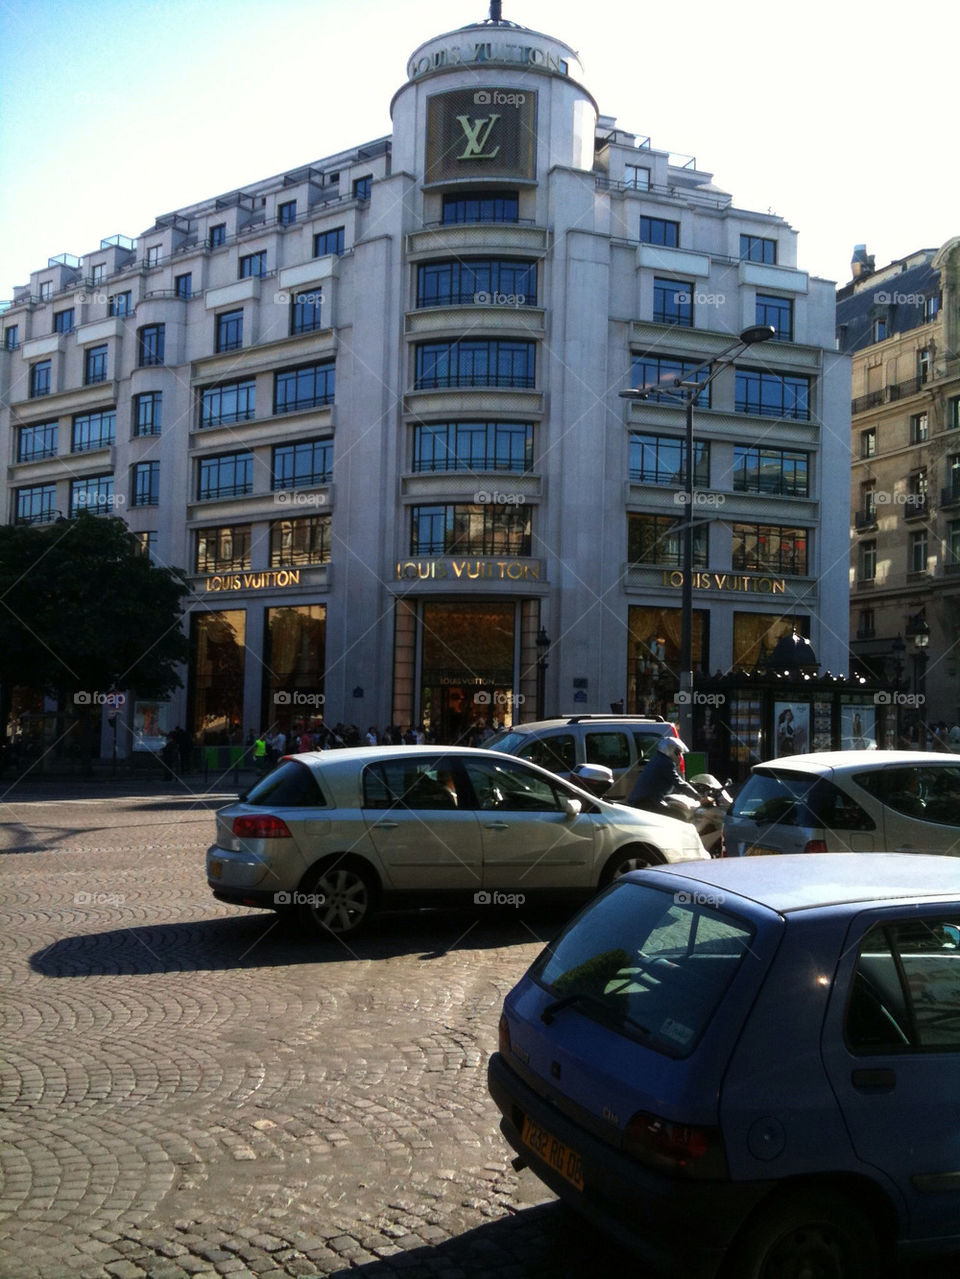 france shopping paris lv by yhazman21